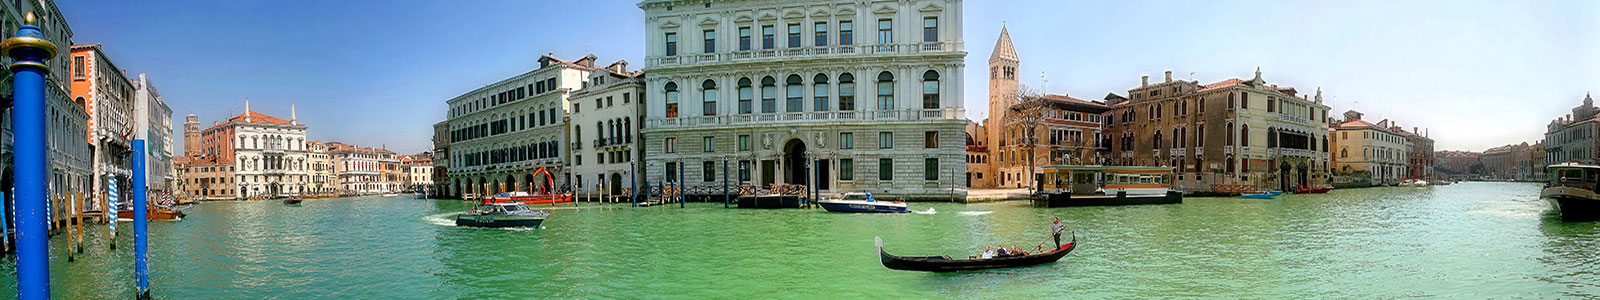 №777 - Италия, Венеция - город на воде